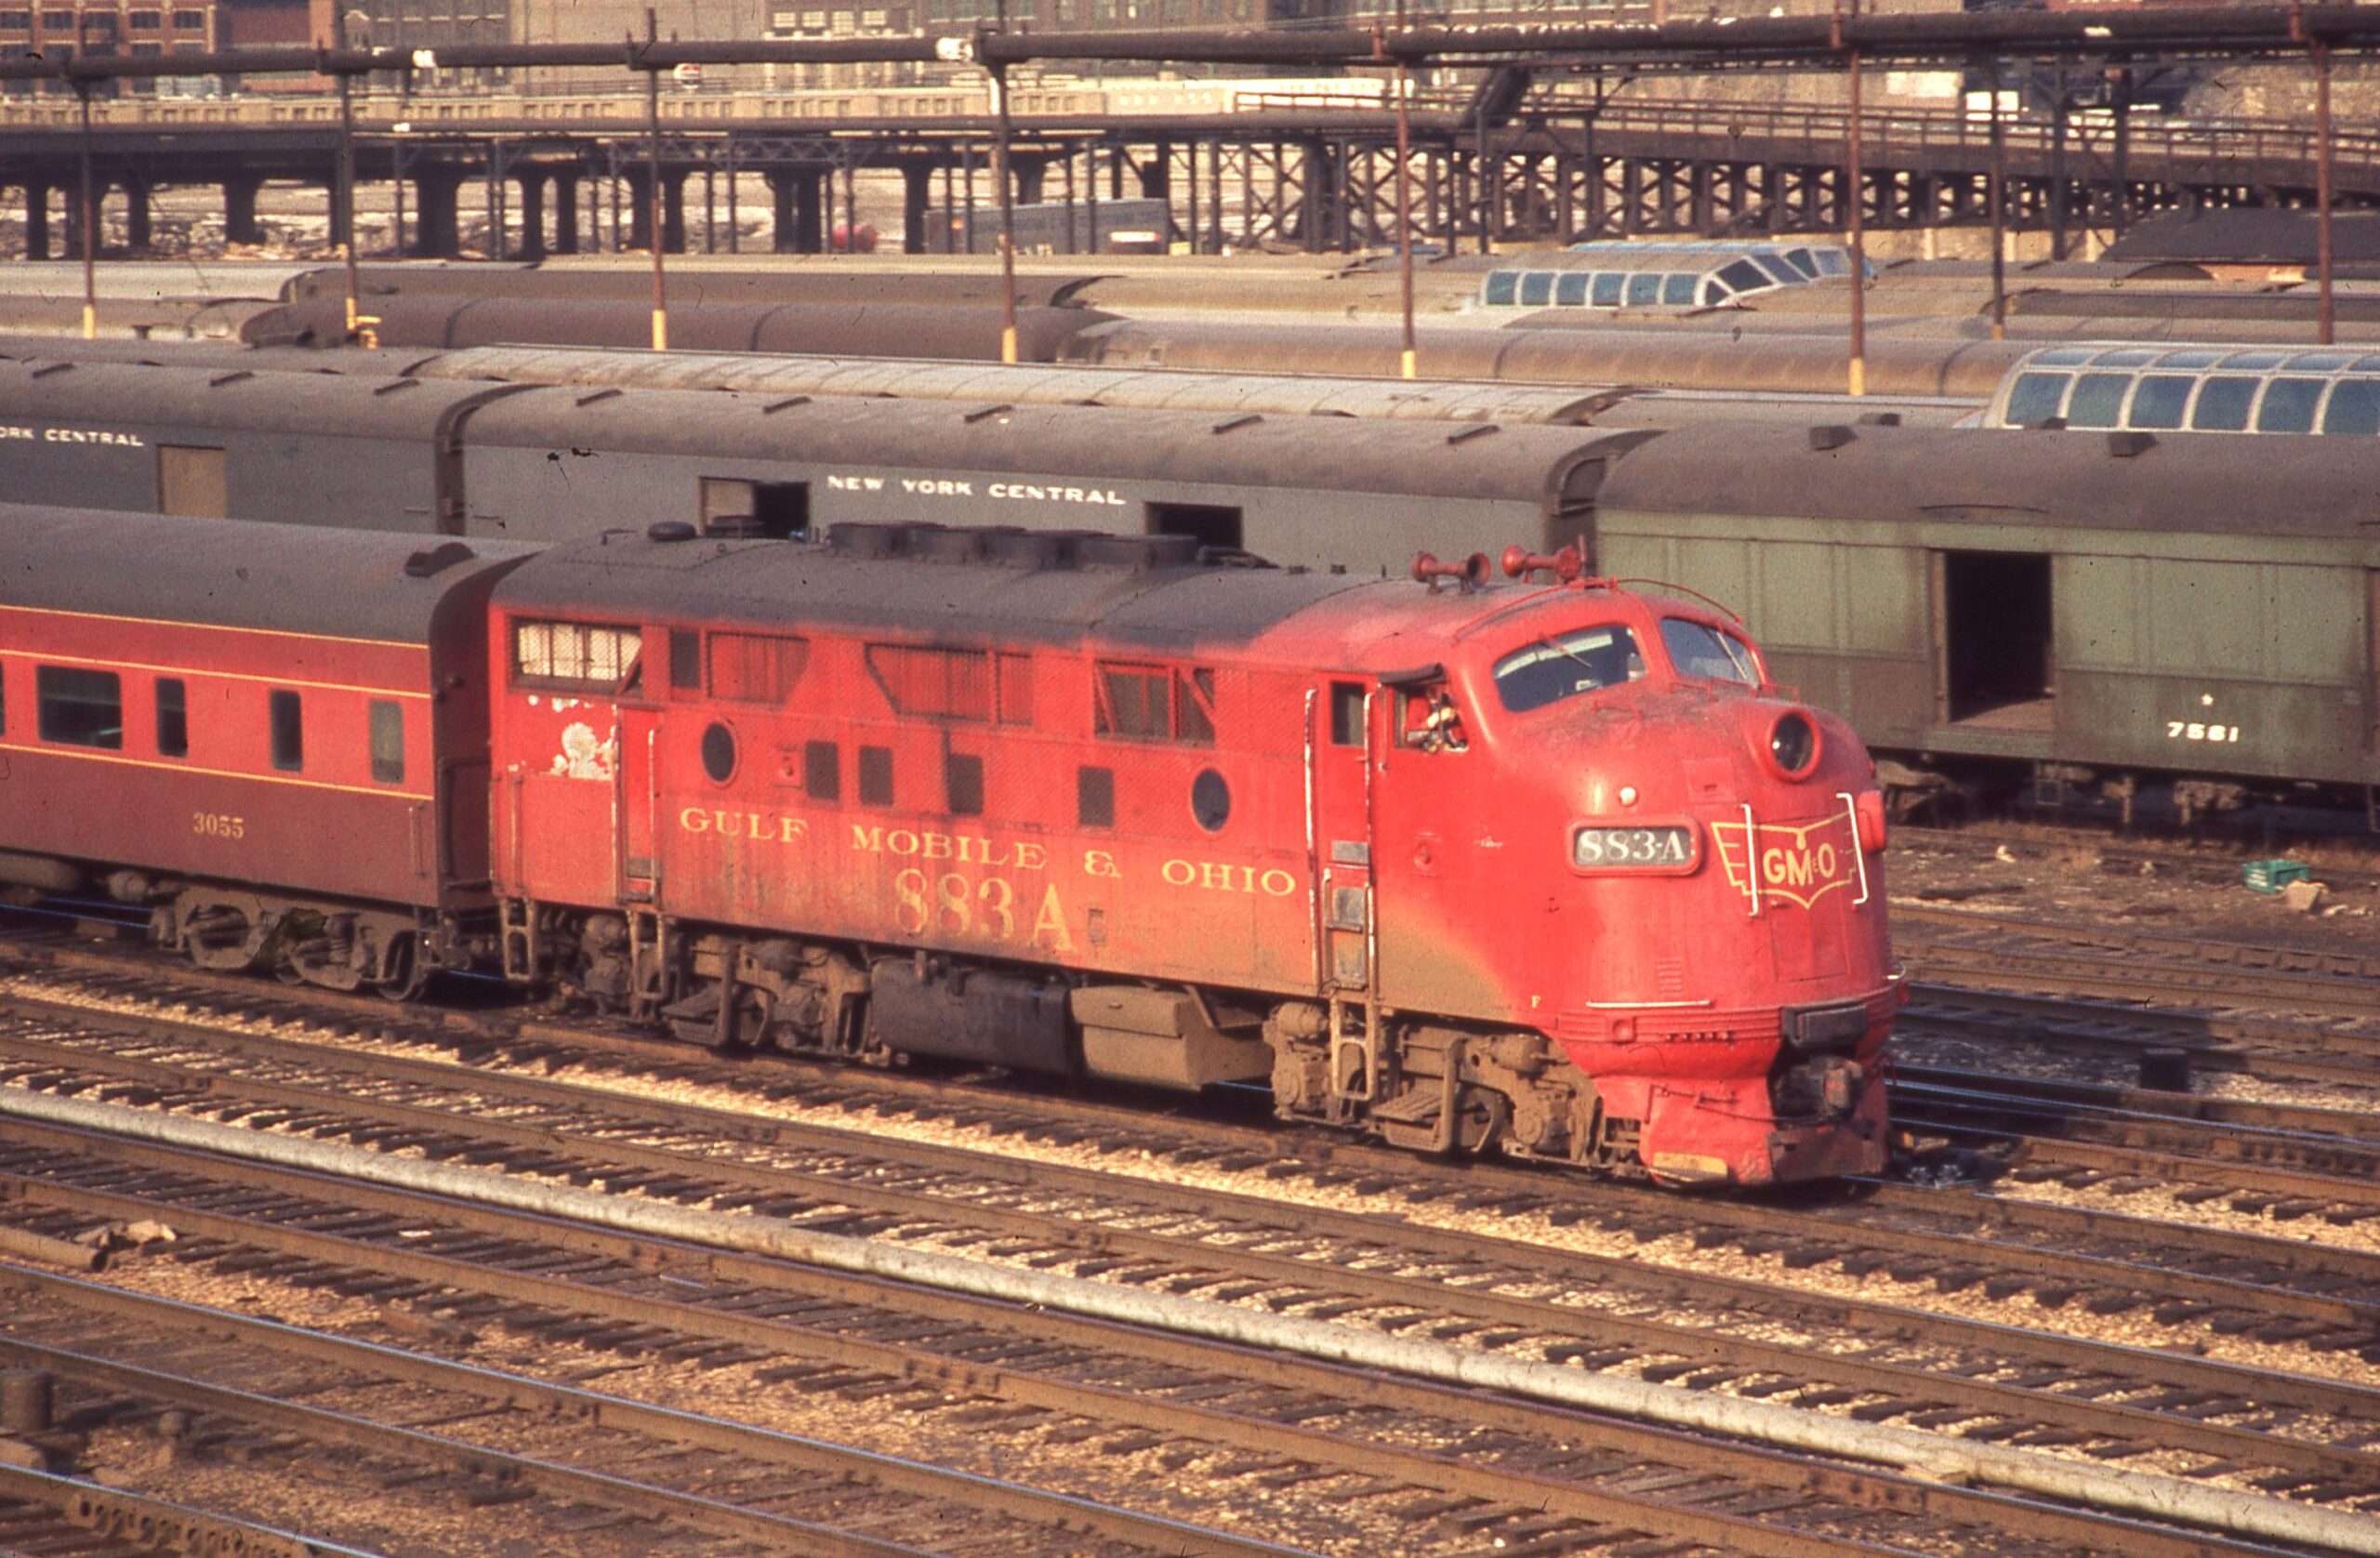 Gulf Mobile and Ohio | Chicago, Illinois | F3a 883A | Commuter train | March 7, 1974